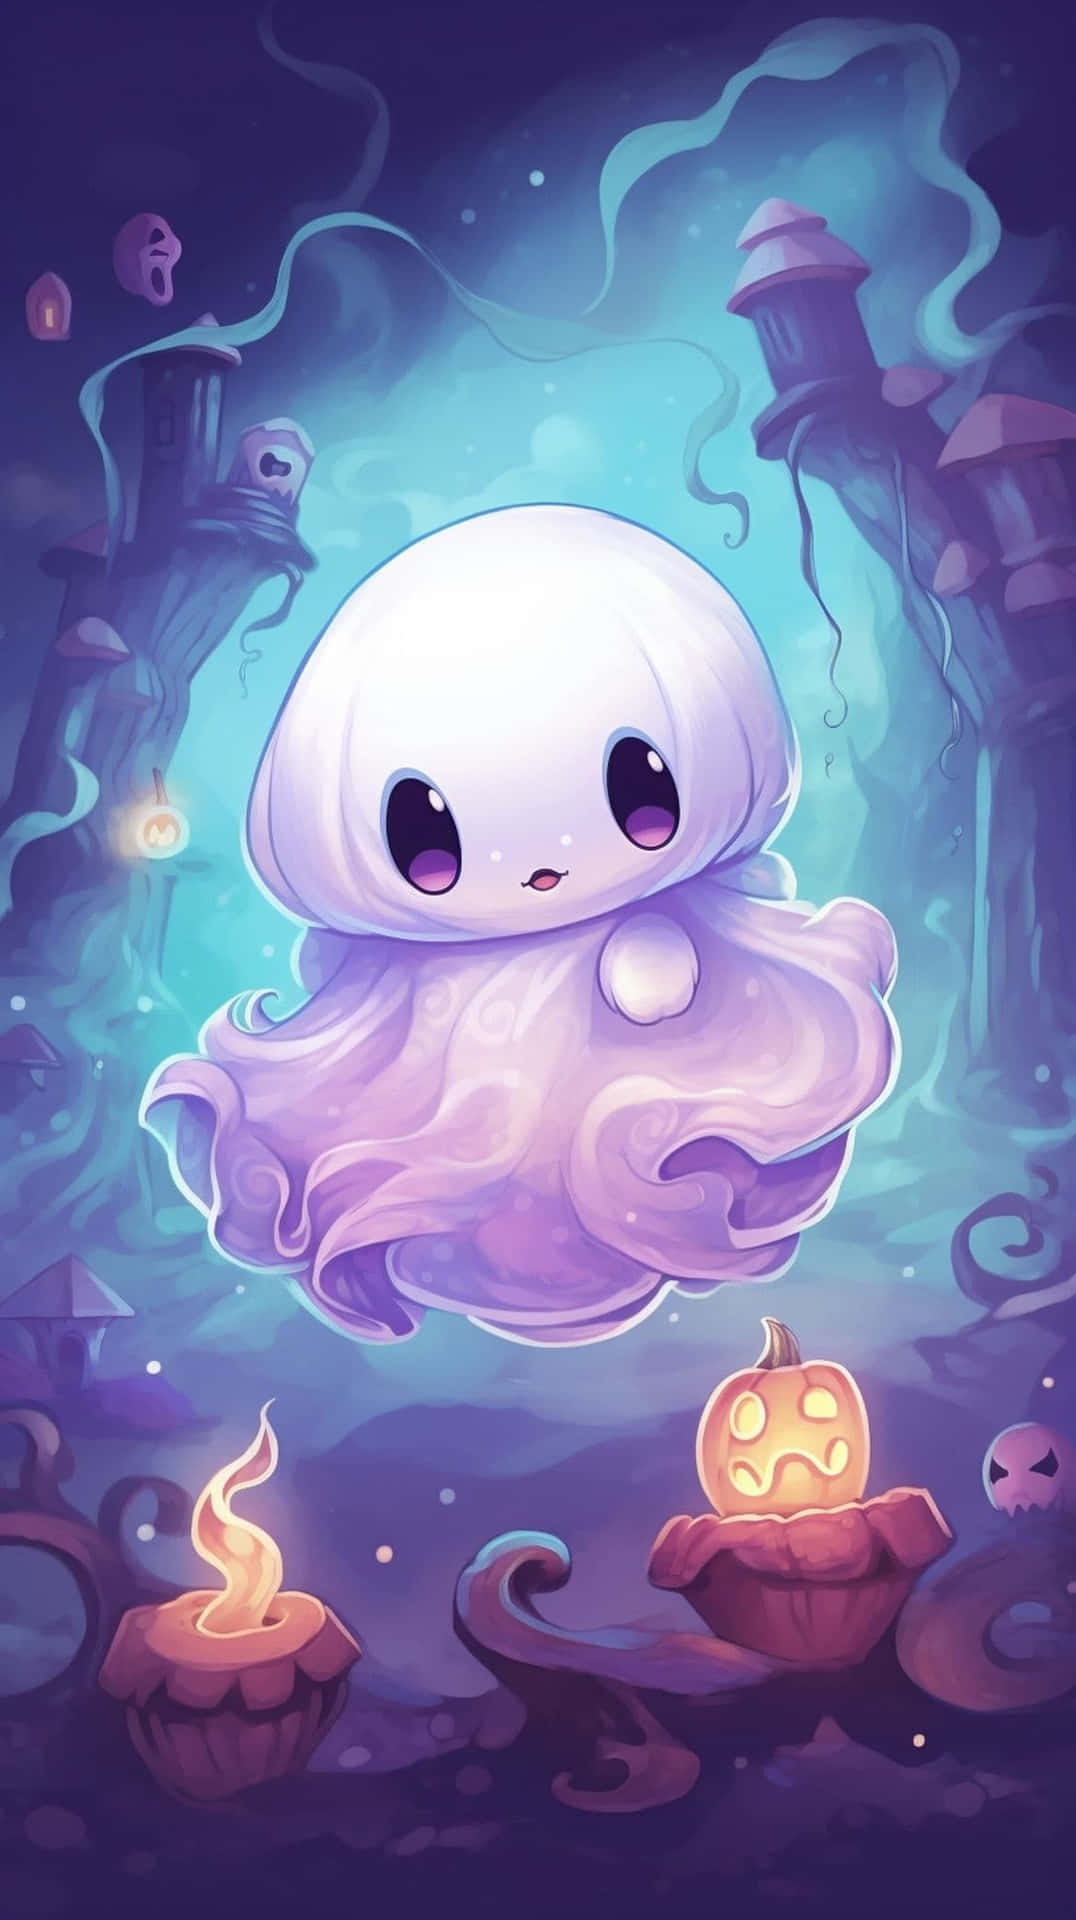 Adorable Ghostly Encounter Wallpaper